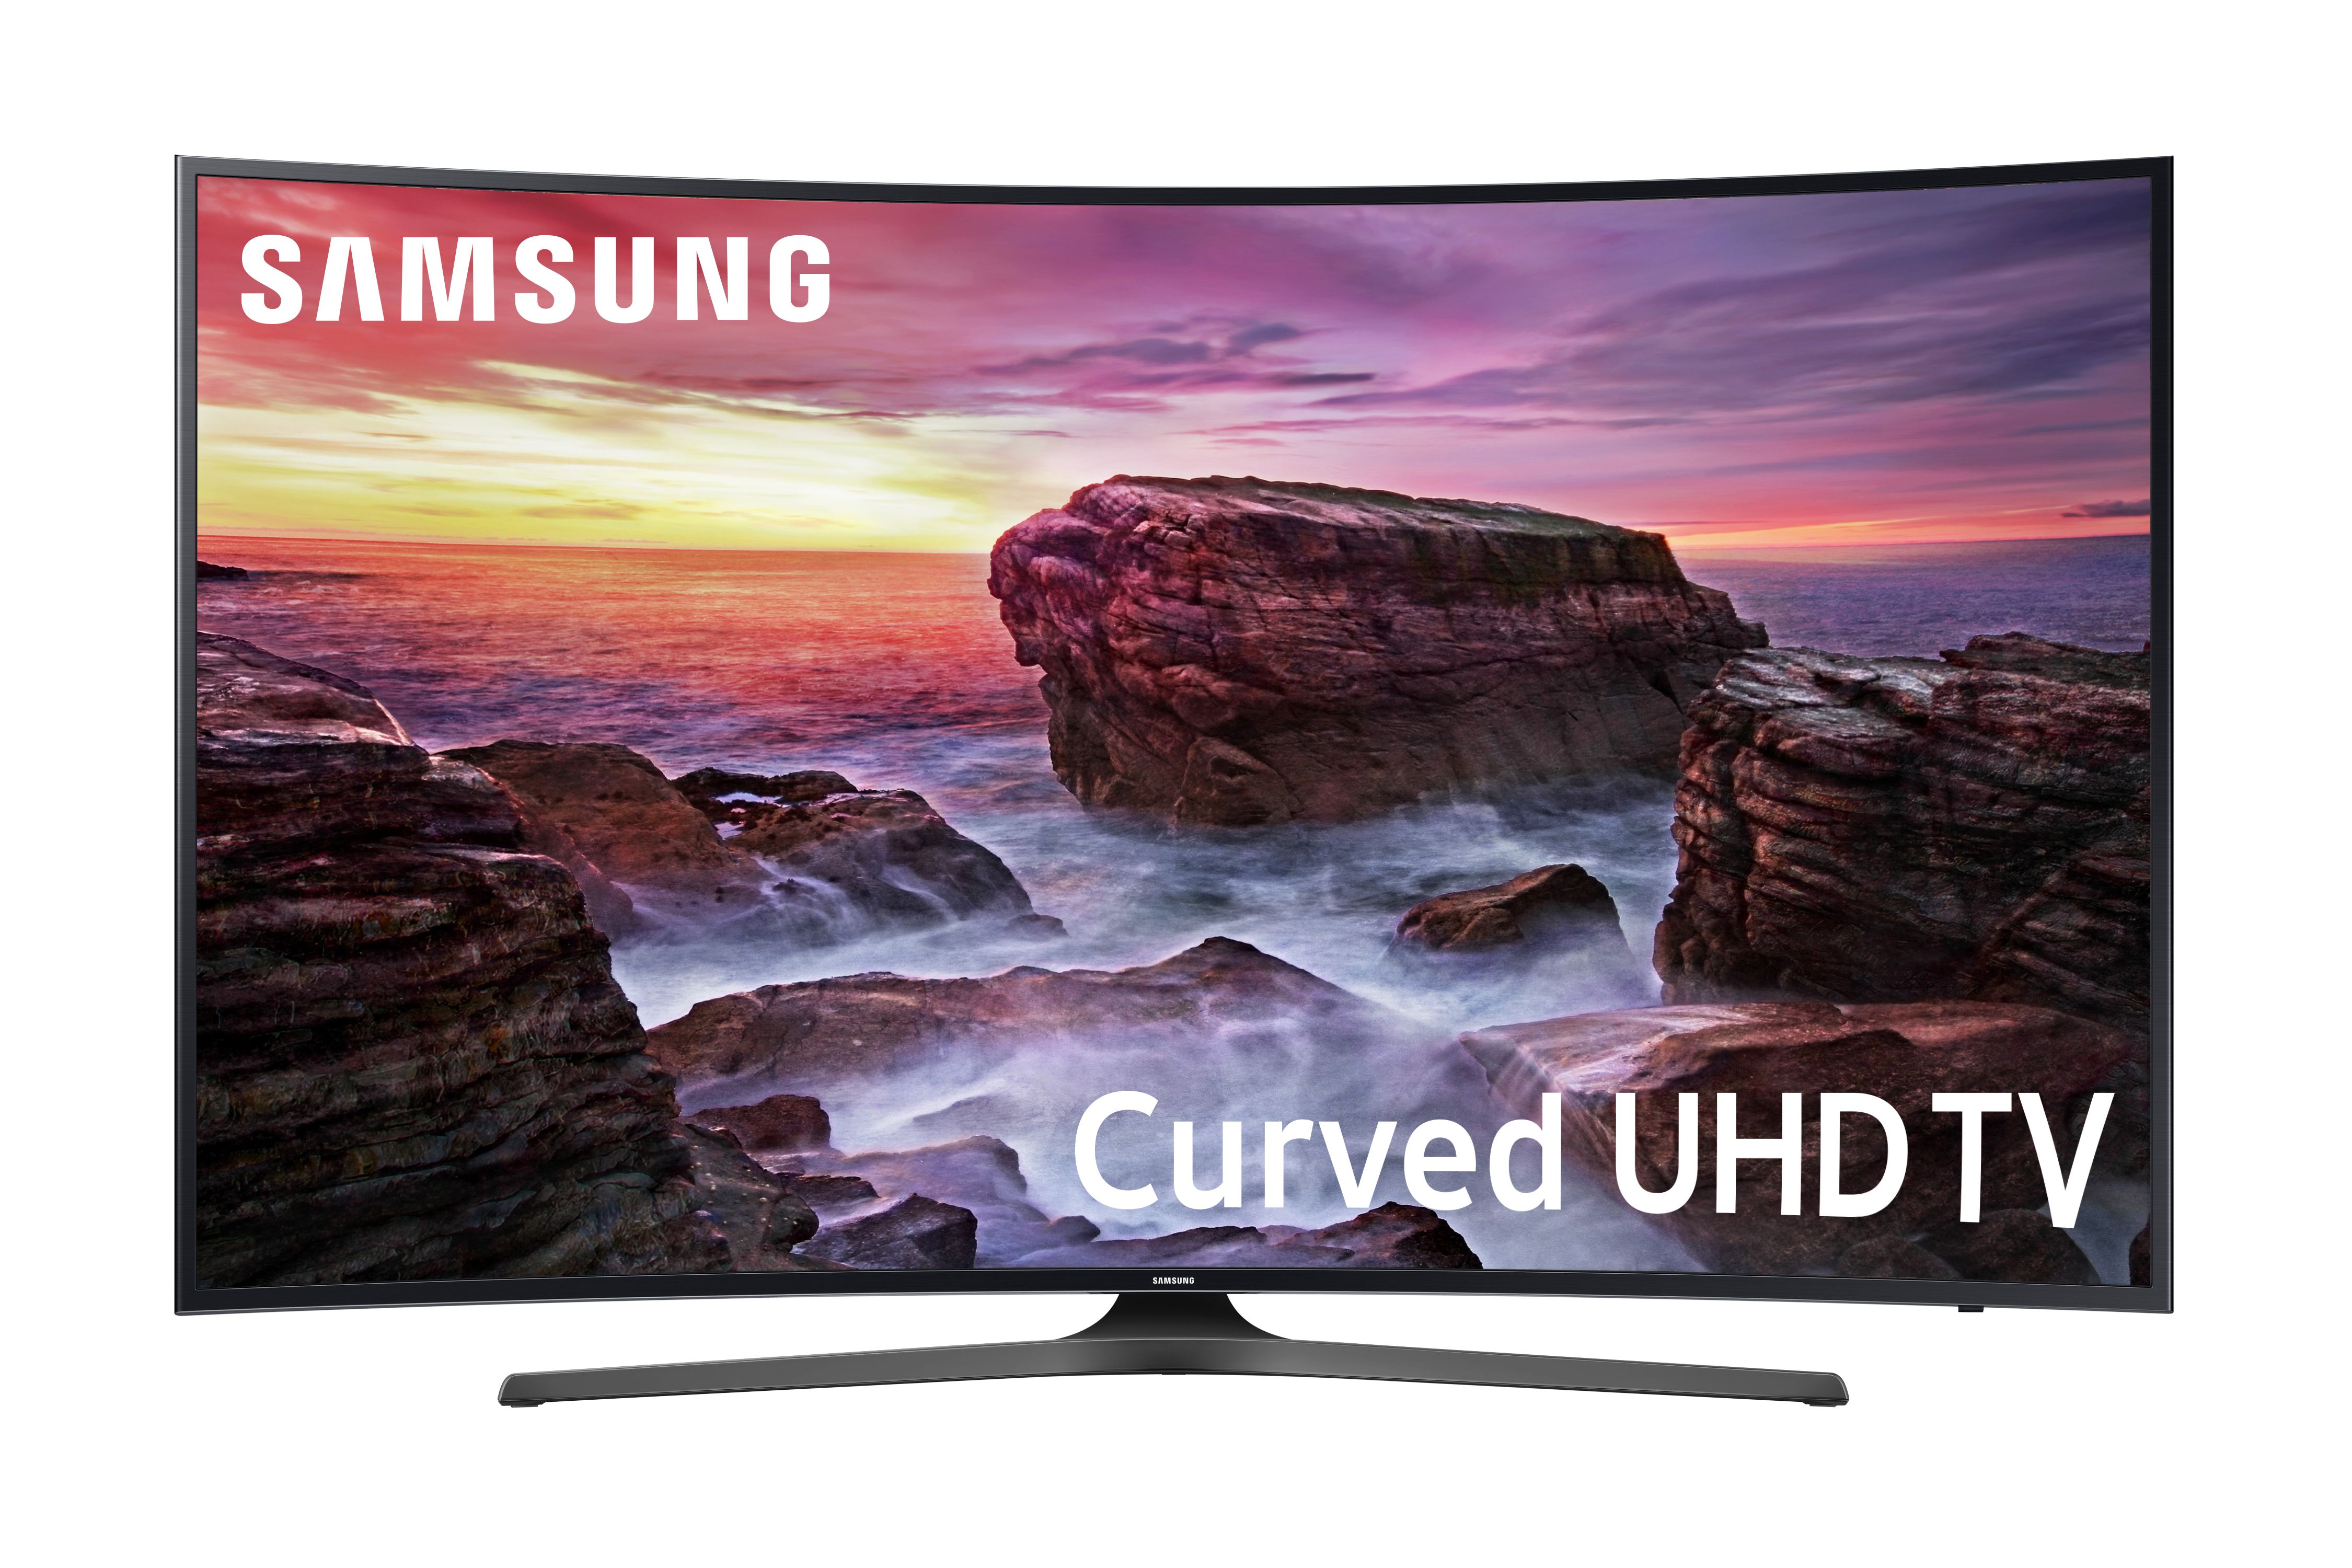 SAMSUNG 65" Class Curved 4K (2160P) Ultra HD Smart LED TV (UN65MU6500FXZA) - image 1 of 12